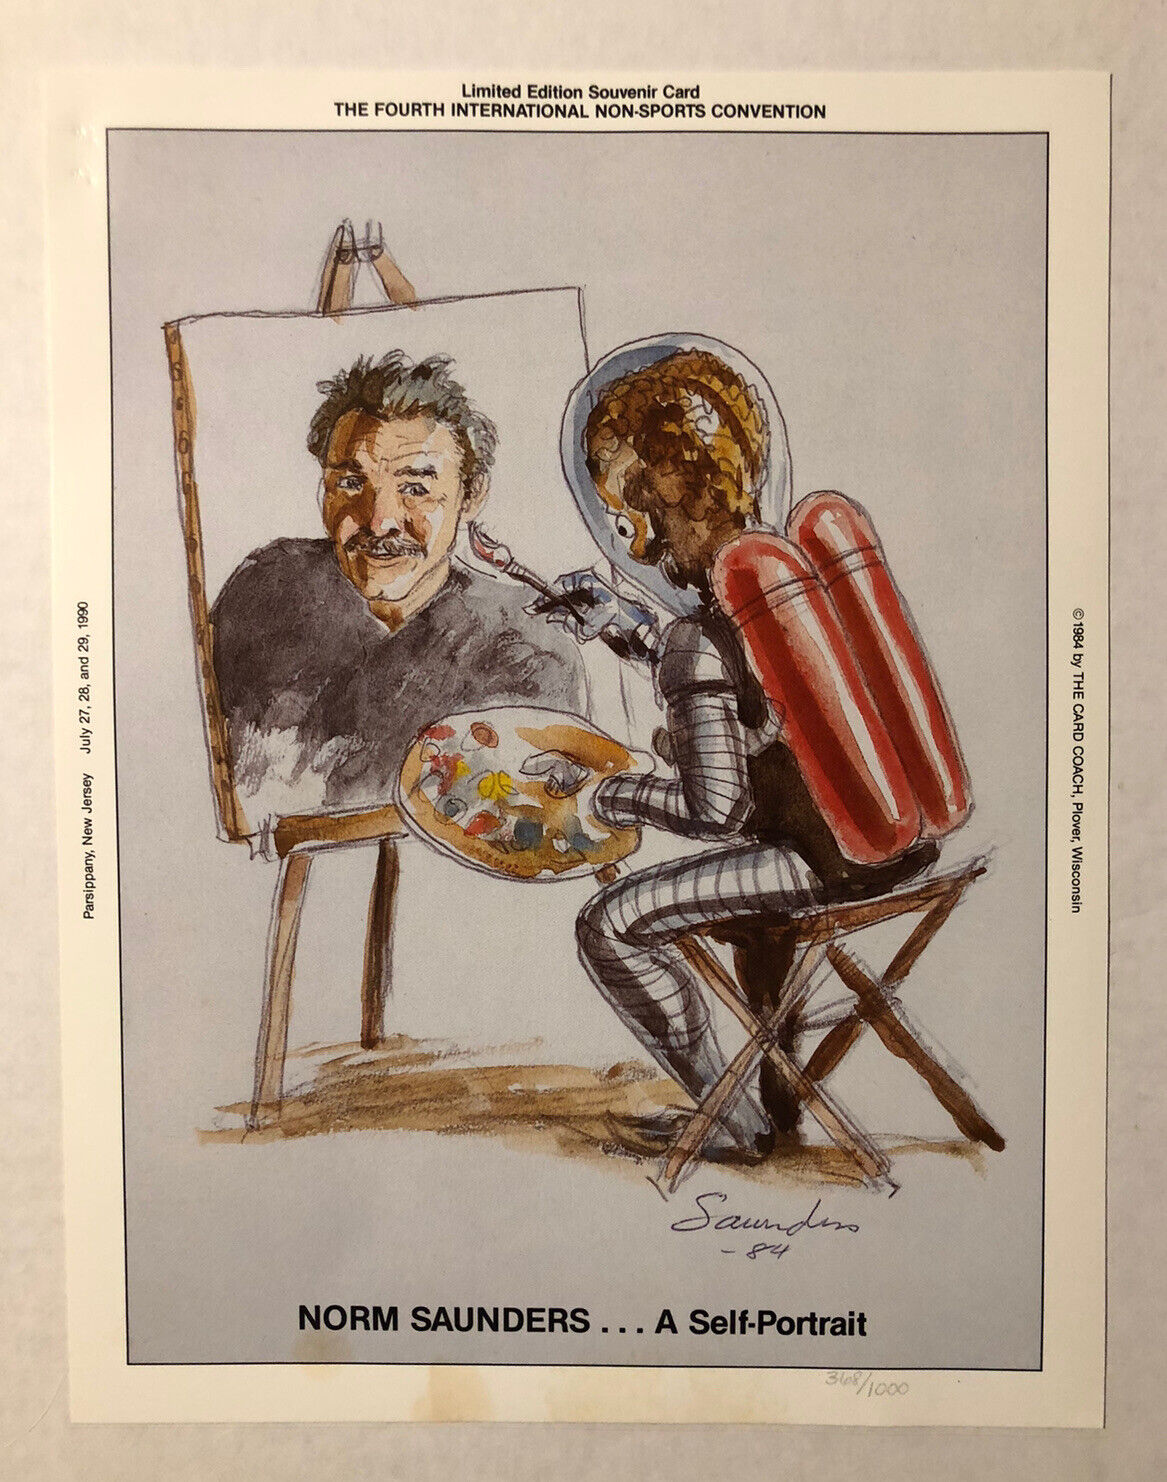 Norm Saunders (mars Attacks) Non-sport Story - Jim Nicewander Monograph Lim. Ed.